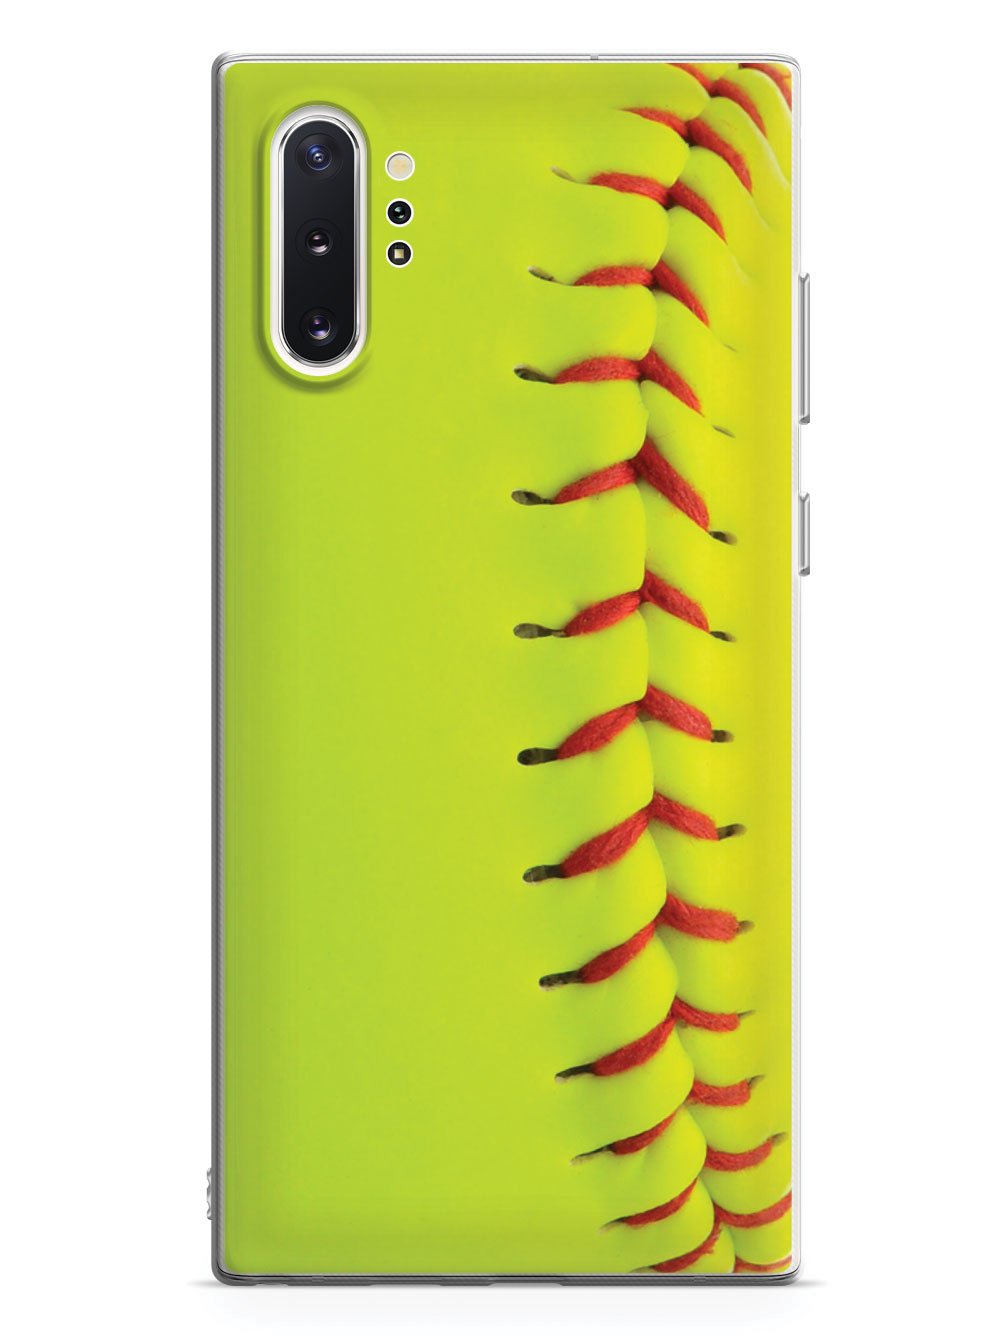 Textured Softball Case